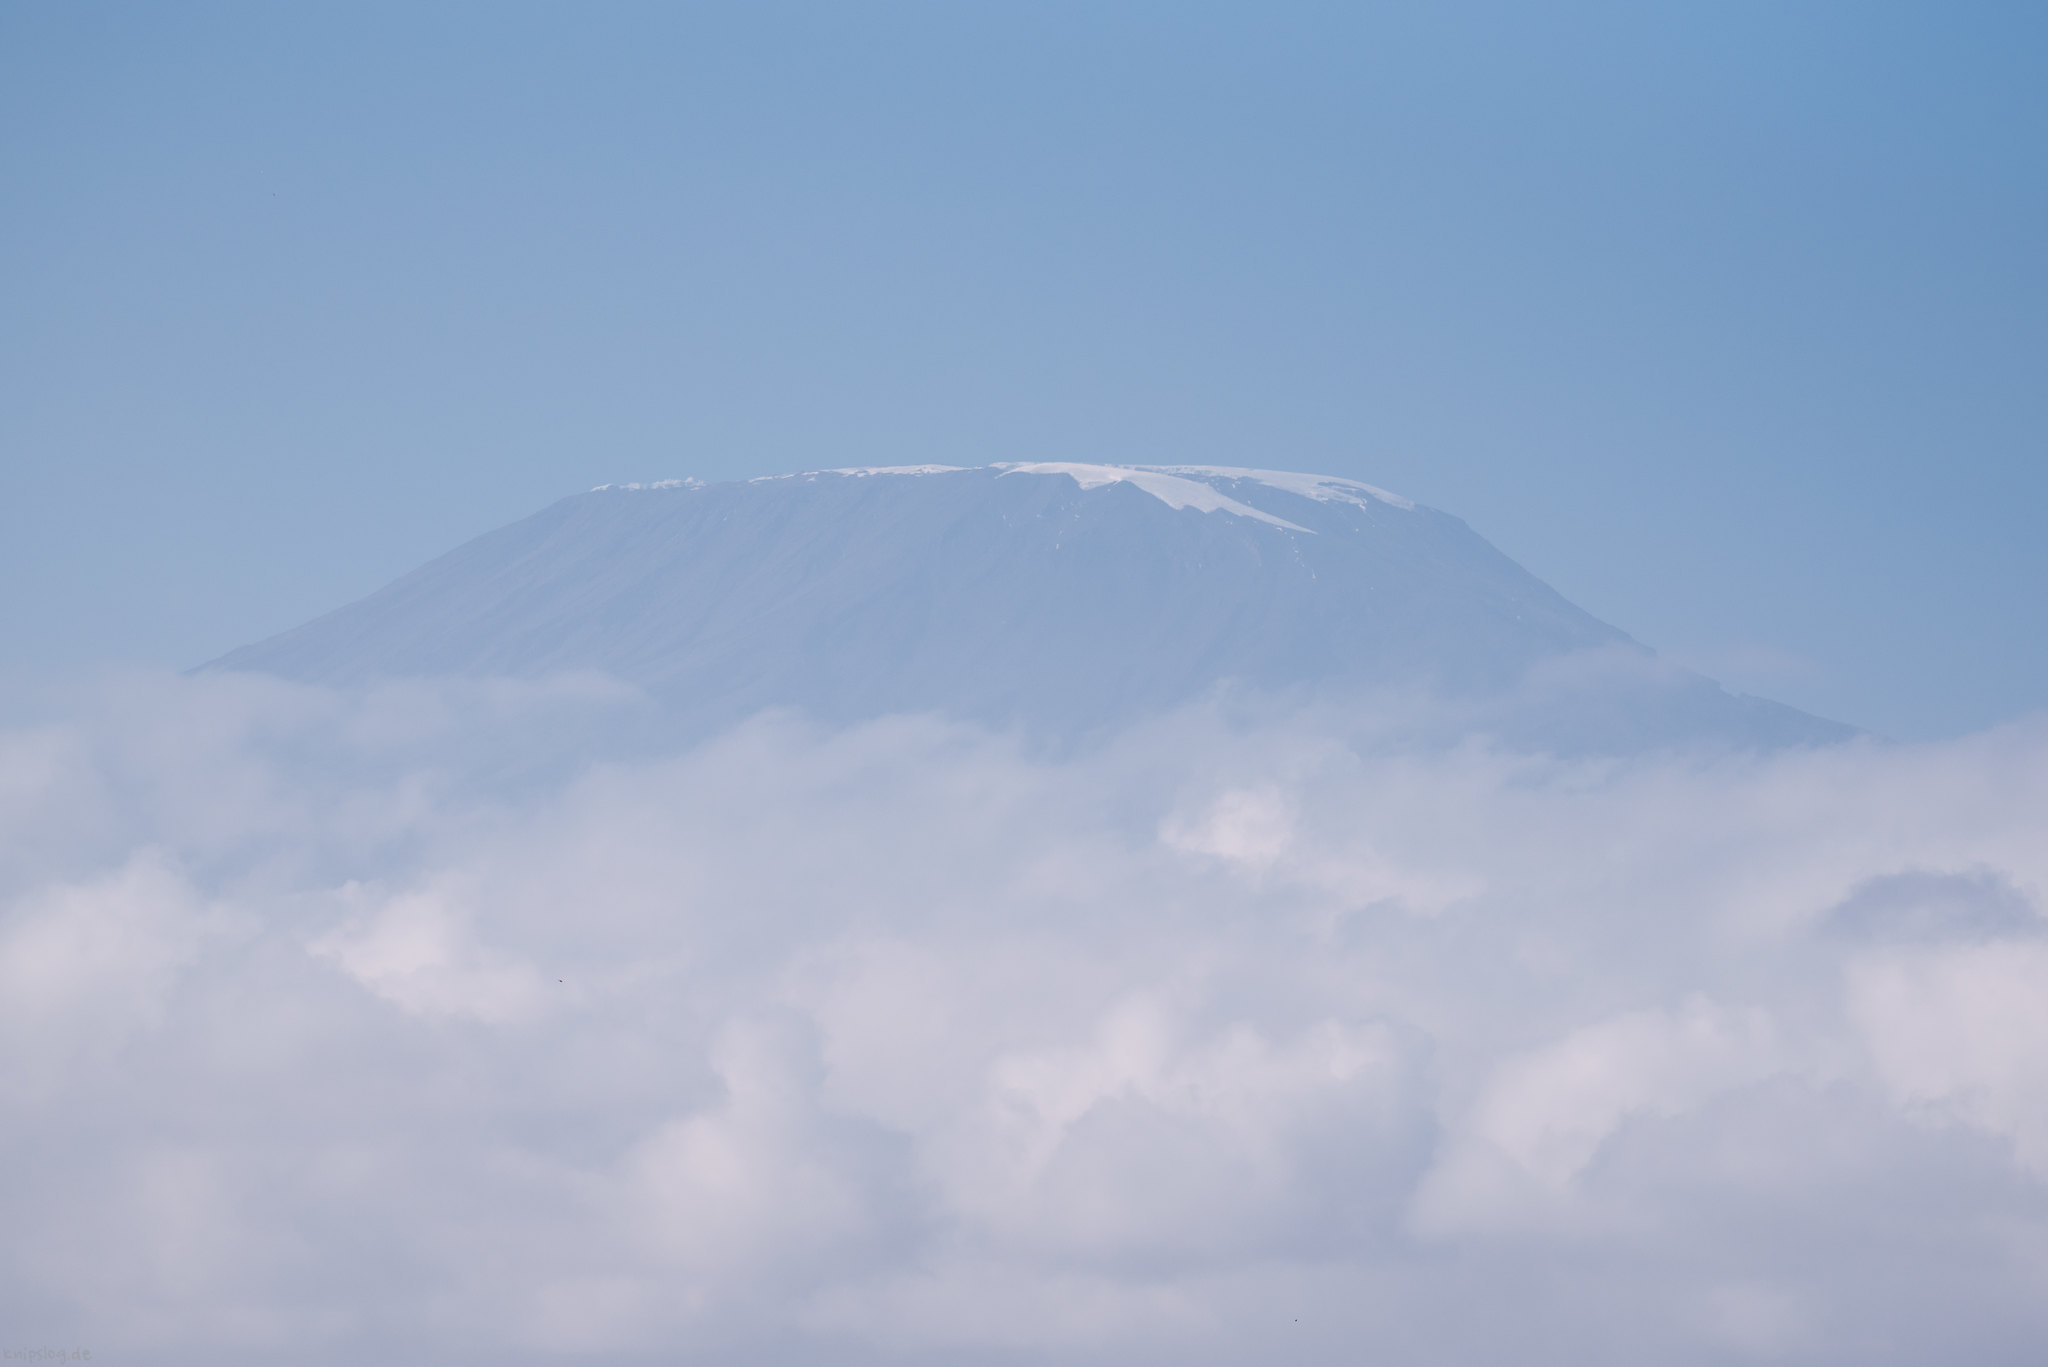 Over the cloads, the Kilimajaro